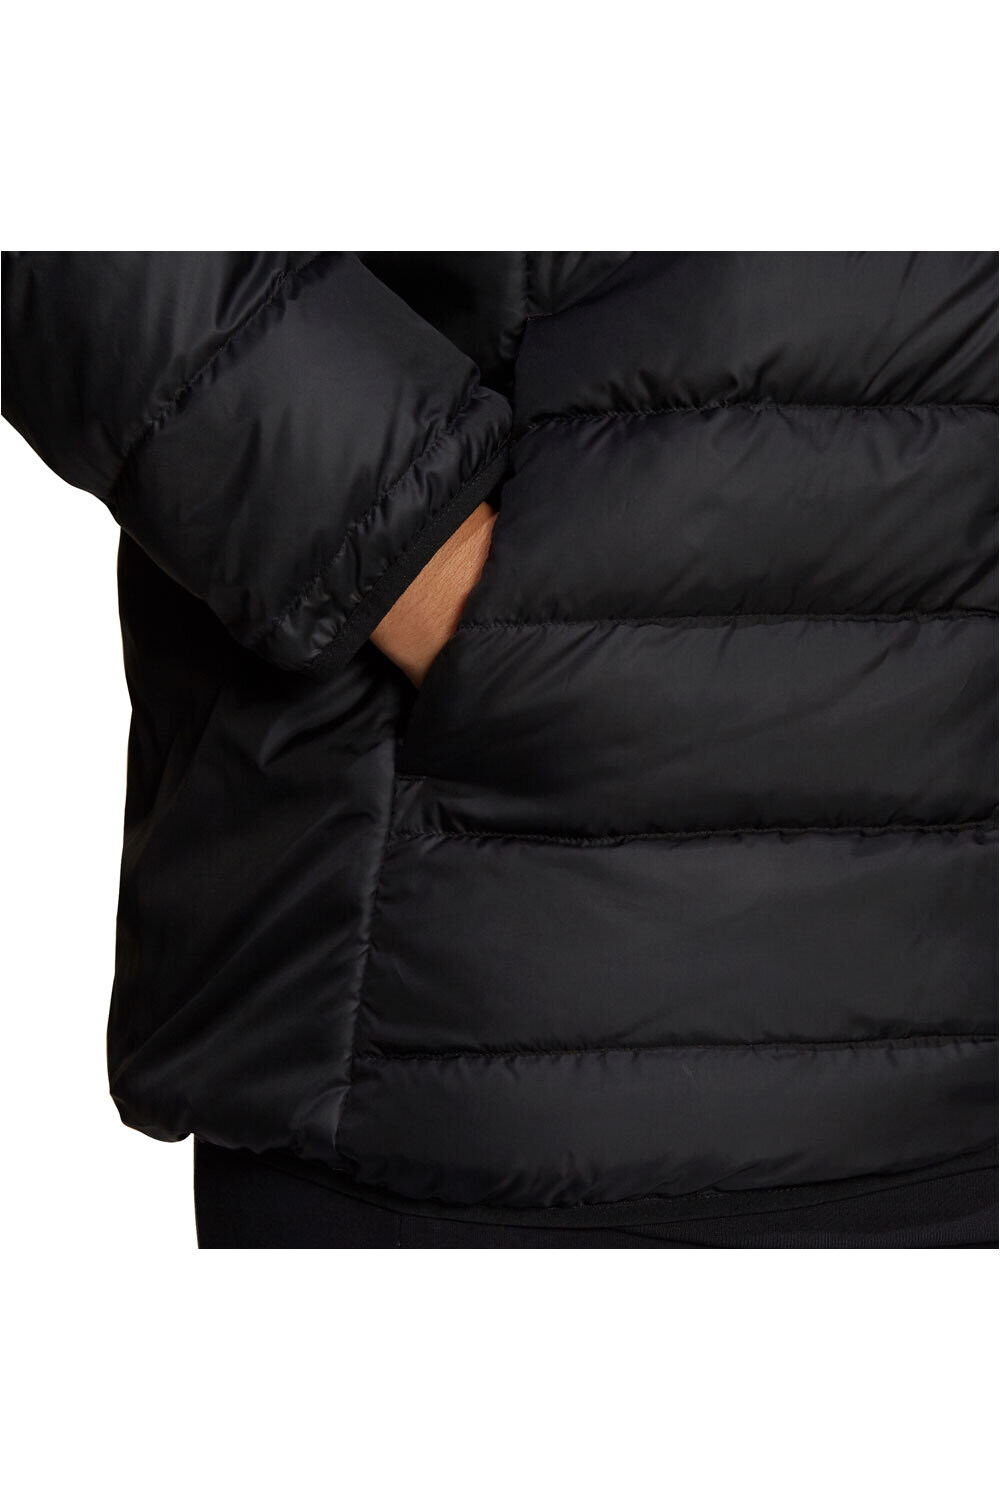 adidas chaqueta outdoor mujer Essentials Light (Tallas grandes) vista detalle